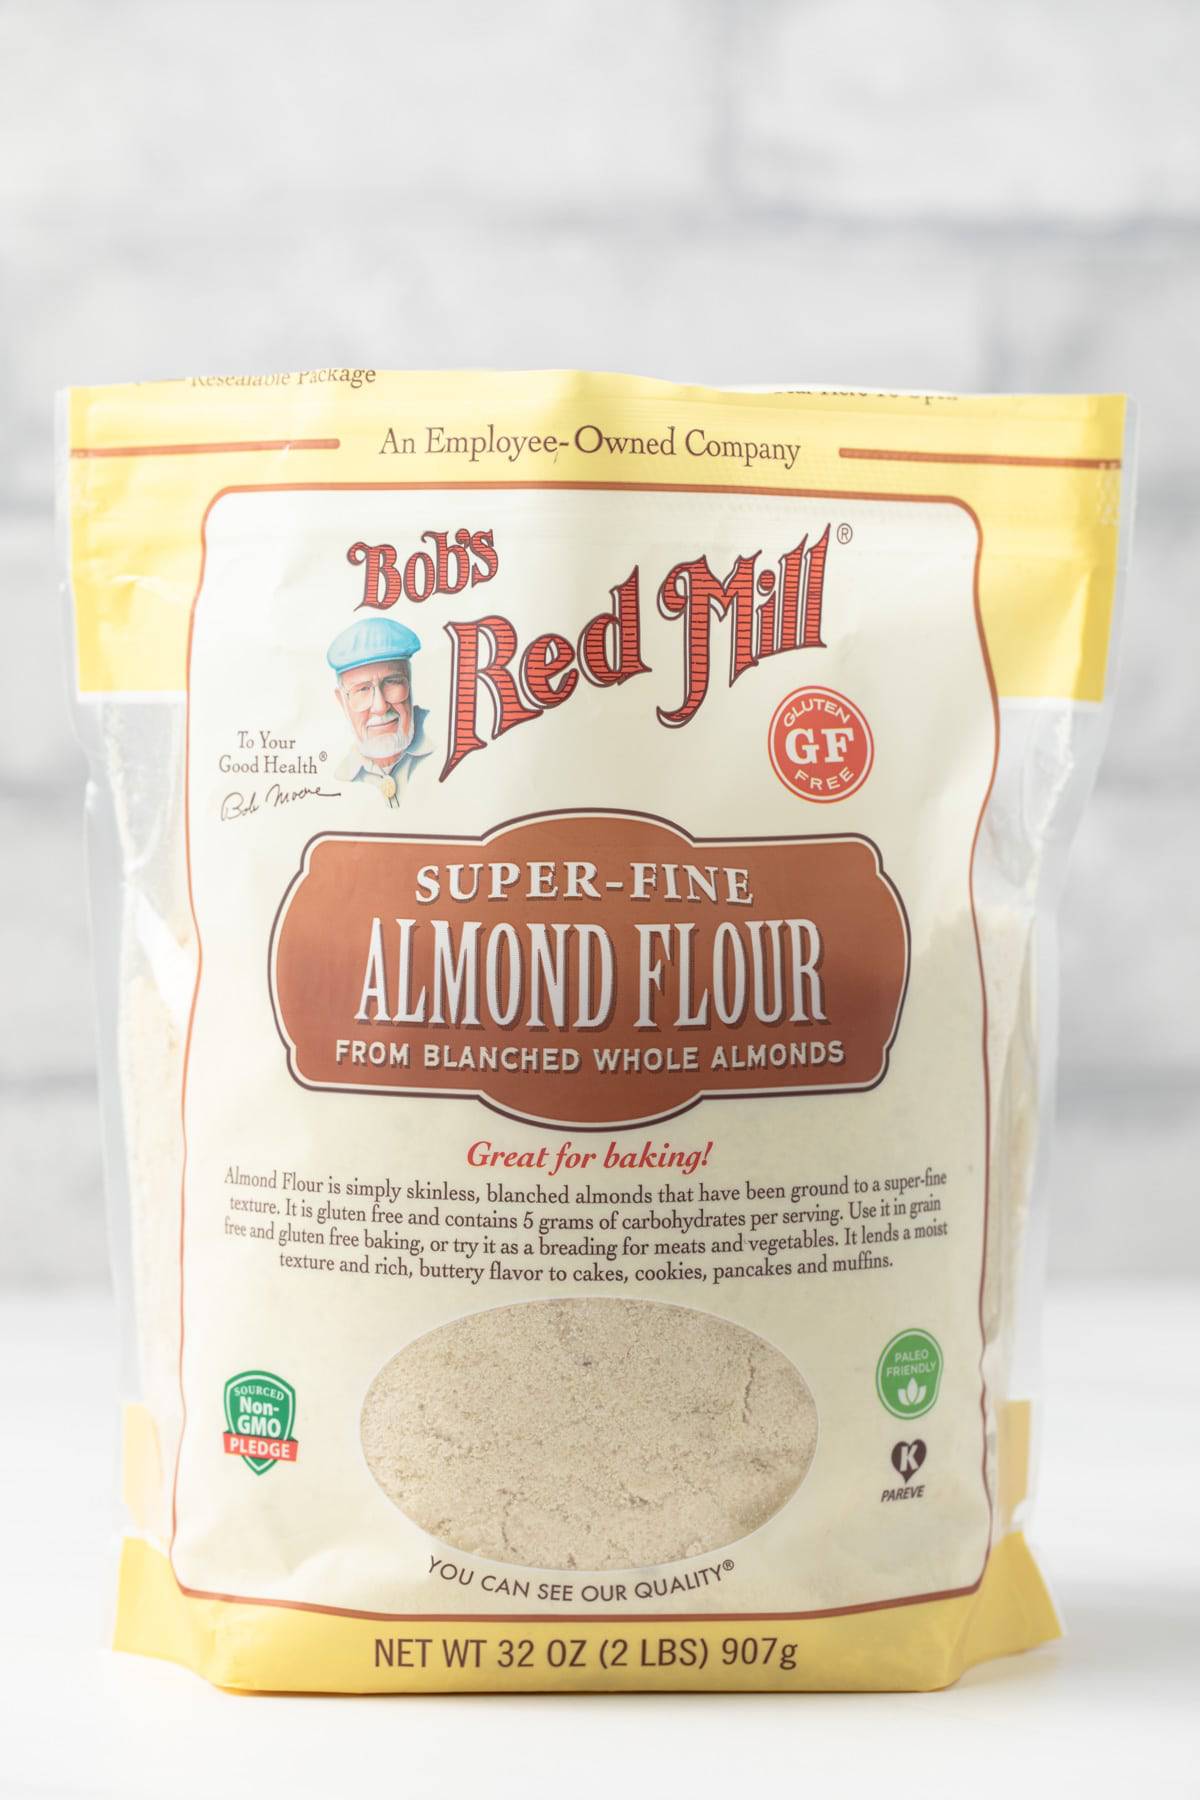 Bob's Red Mill almond flour